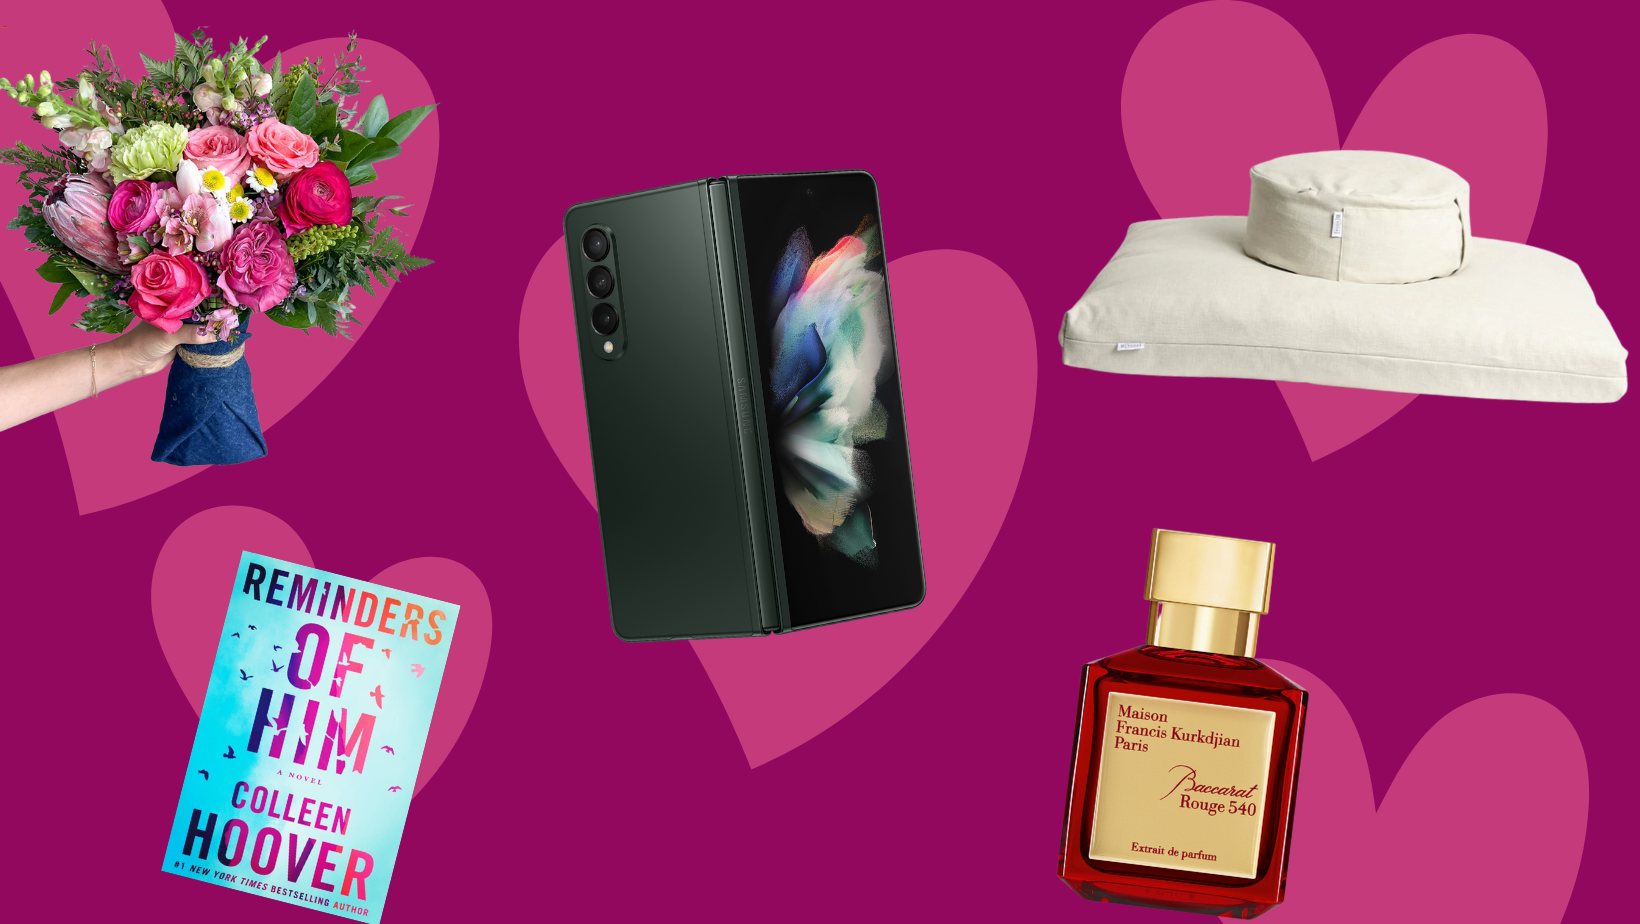 Bare Essentials for Valentine's Day Gift Guide